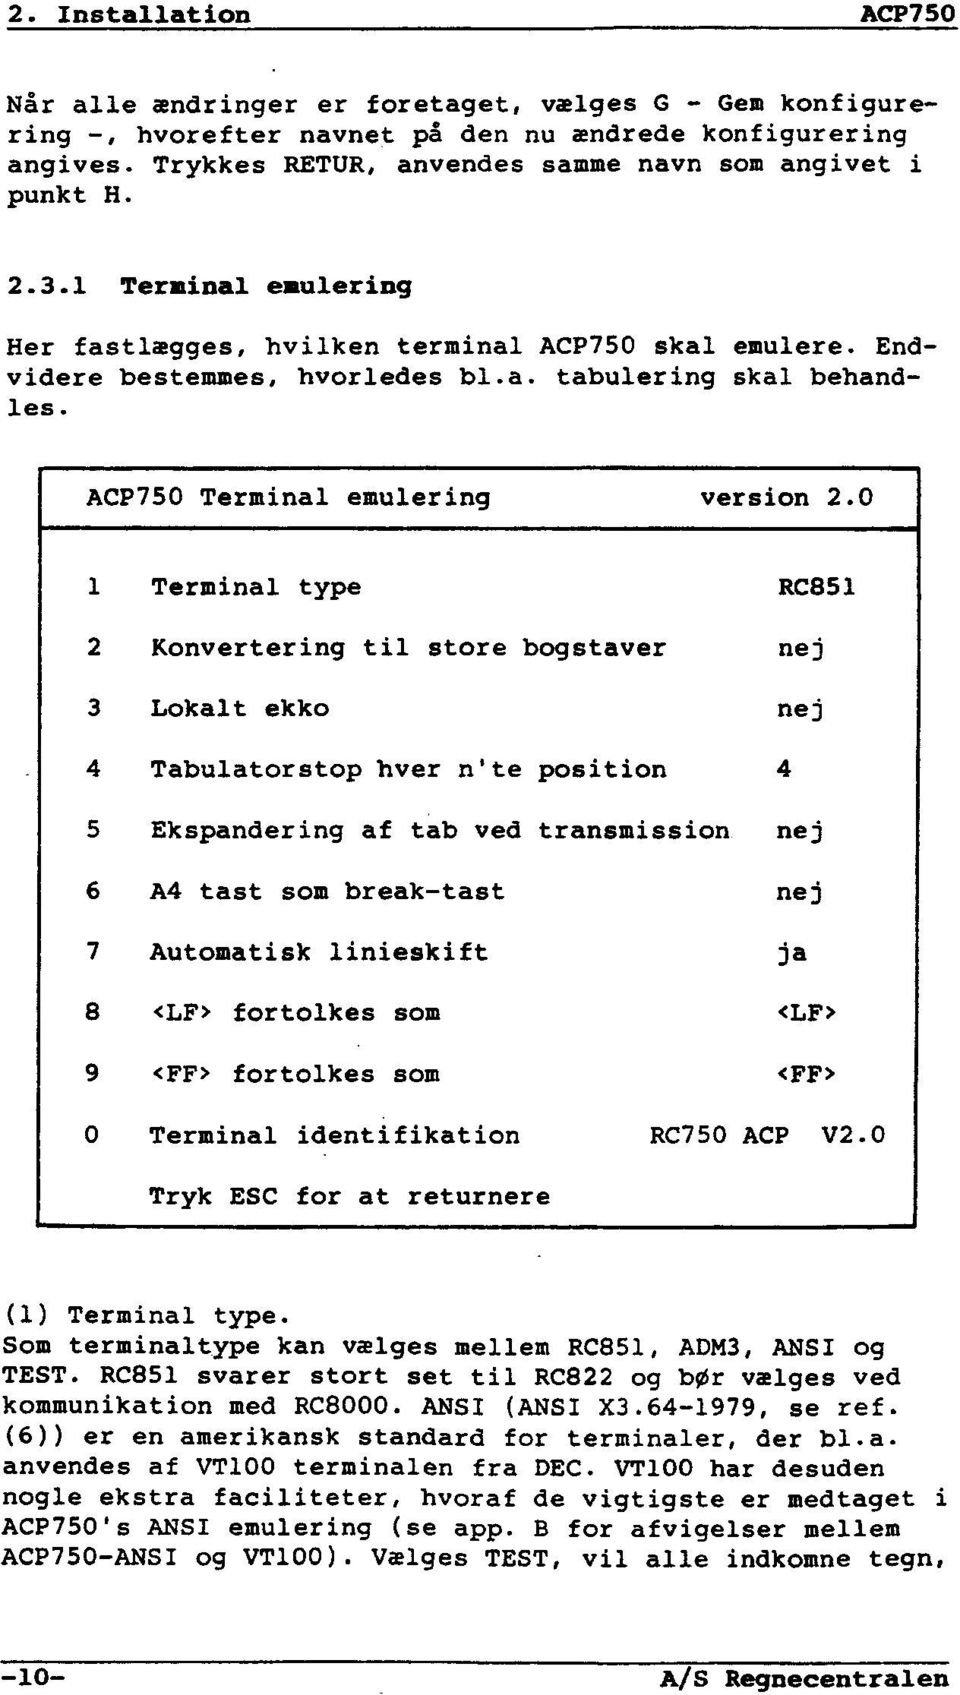 ACP750 Terminal emulering version 2.